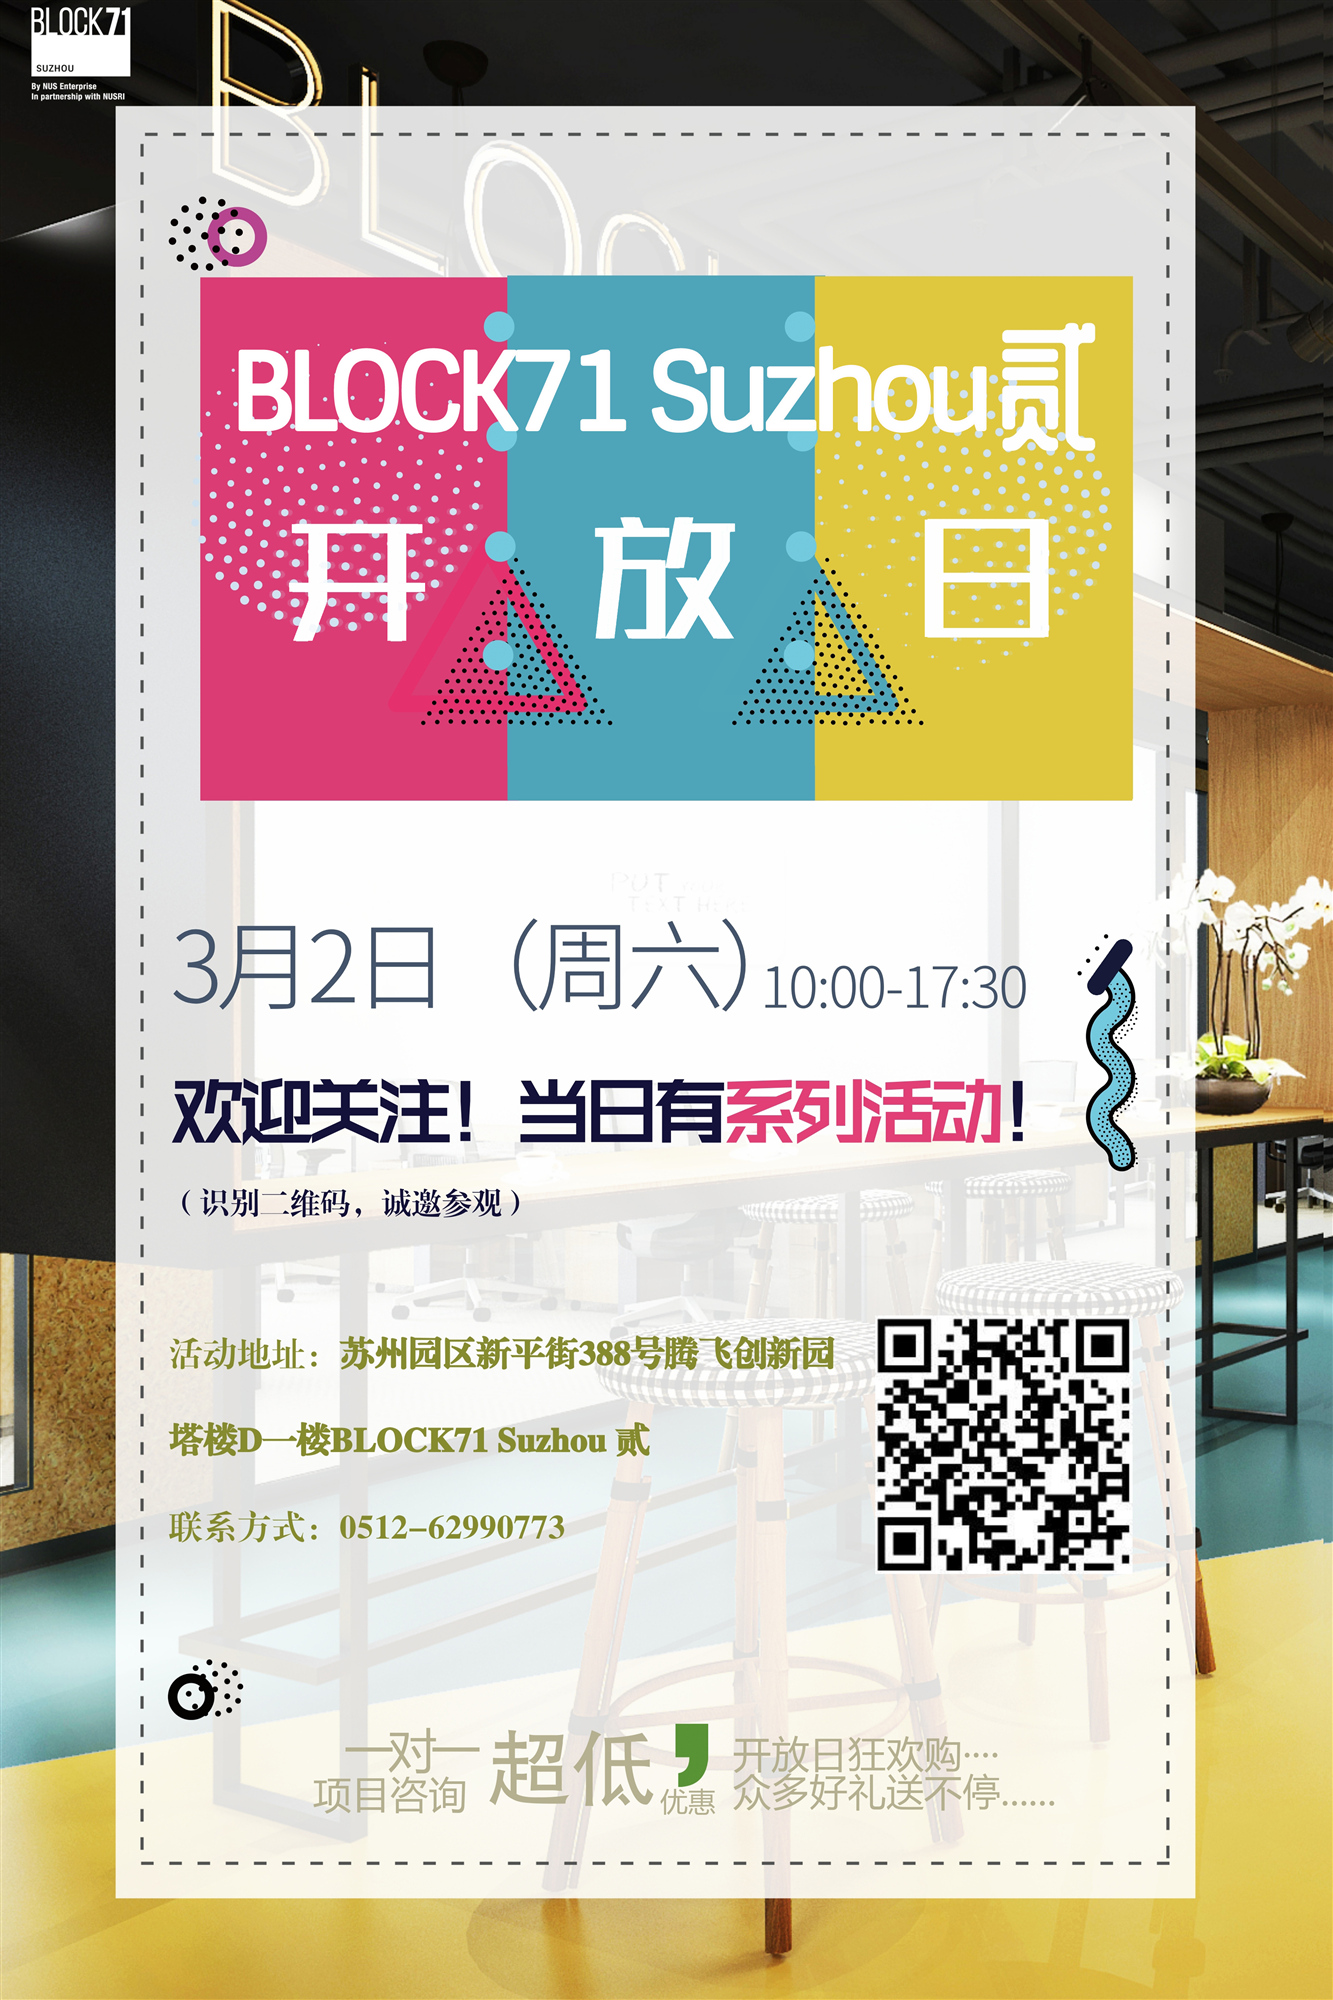 BLOCK71 Suzhou 贰 Open Day